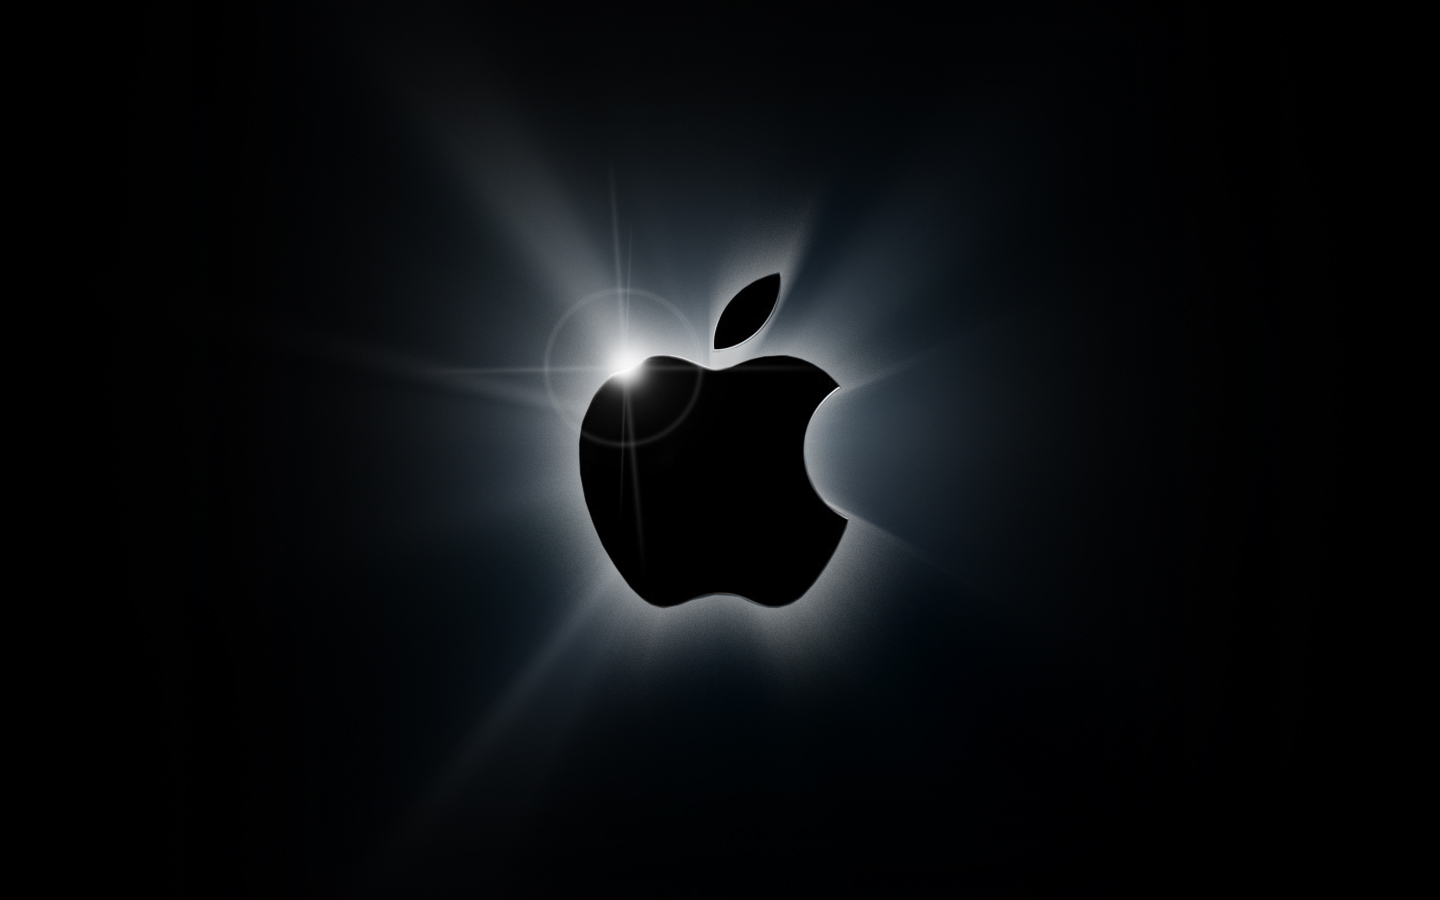 Black Apple Logo HD Wallpaper Background For PC Desktop And Mac